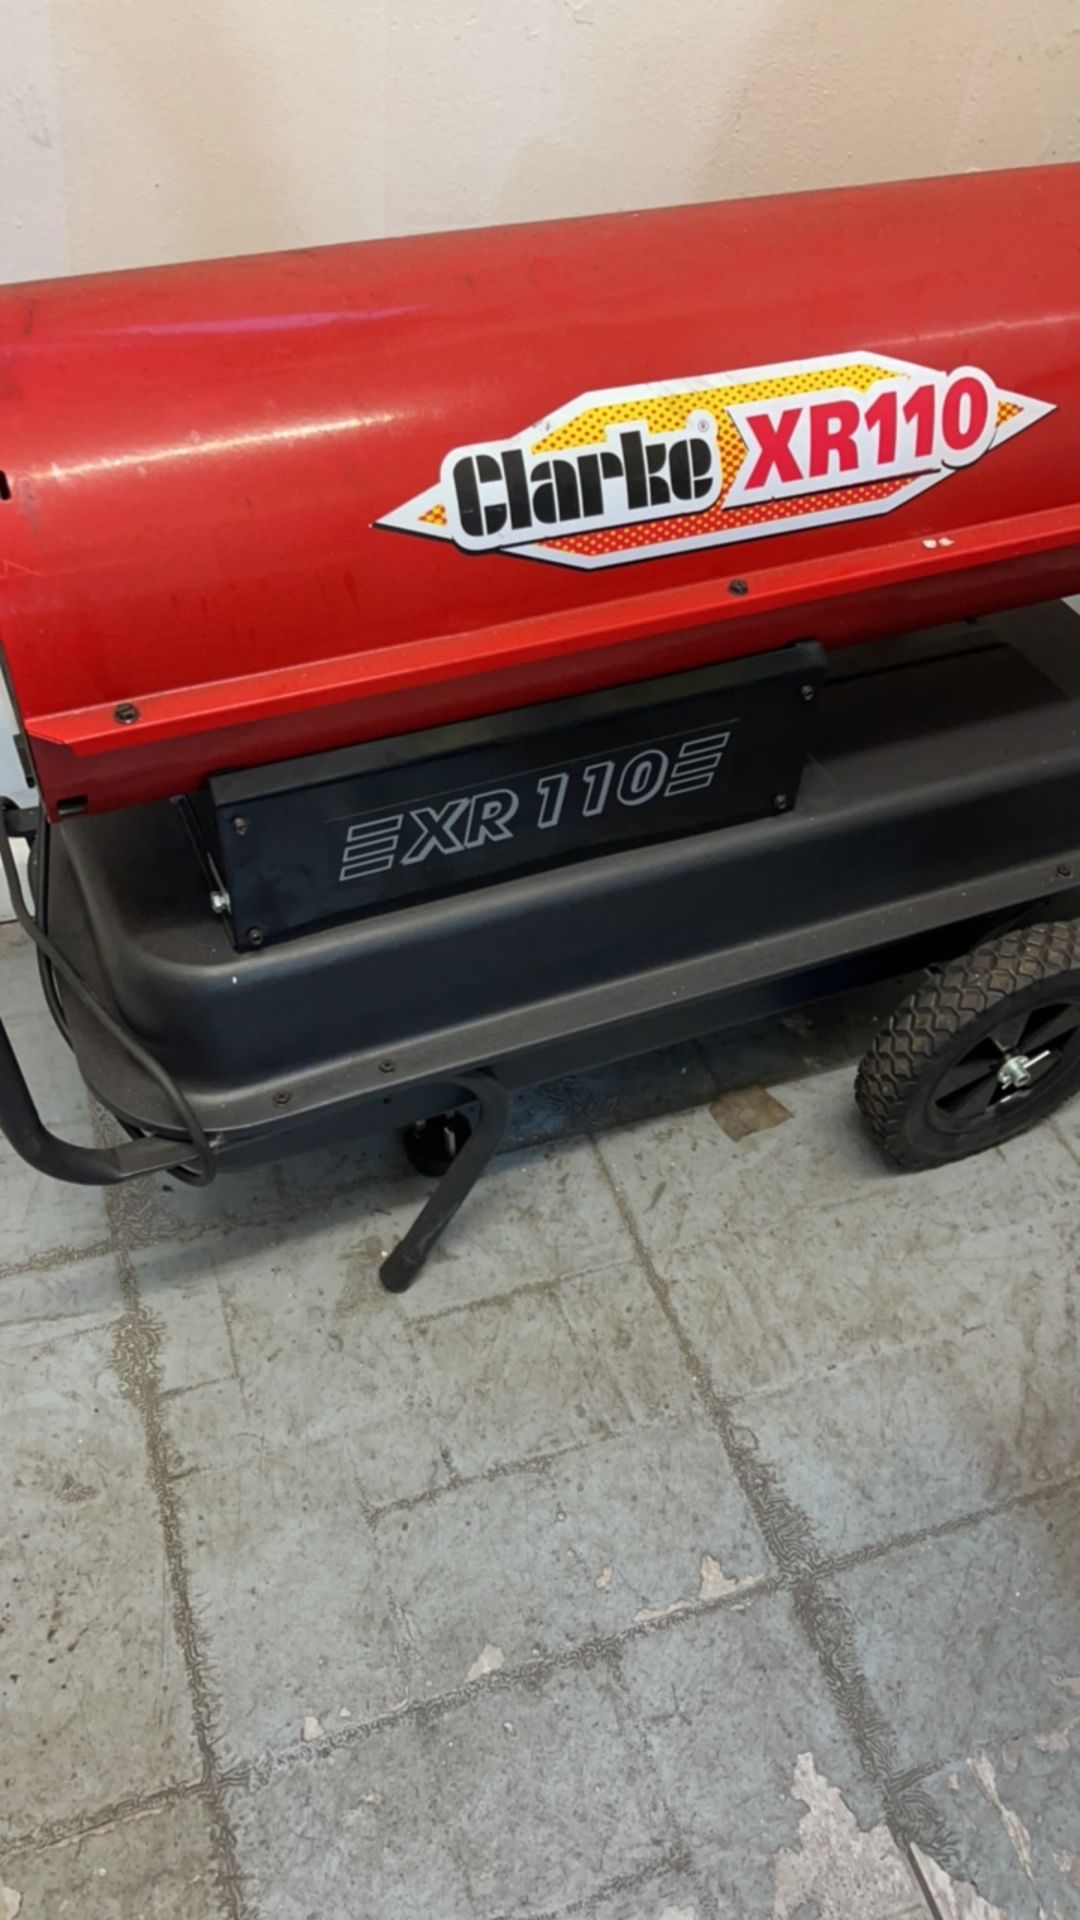 Clarke XR110 paraffin/diesel space heater - Image 2 of 3